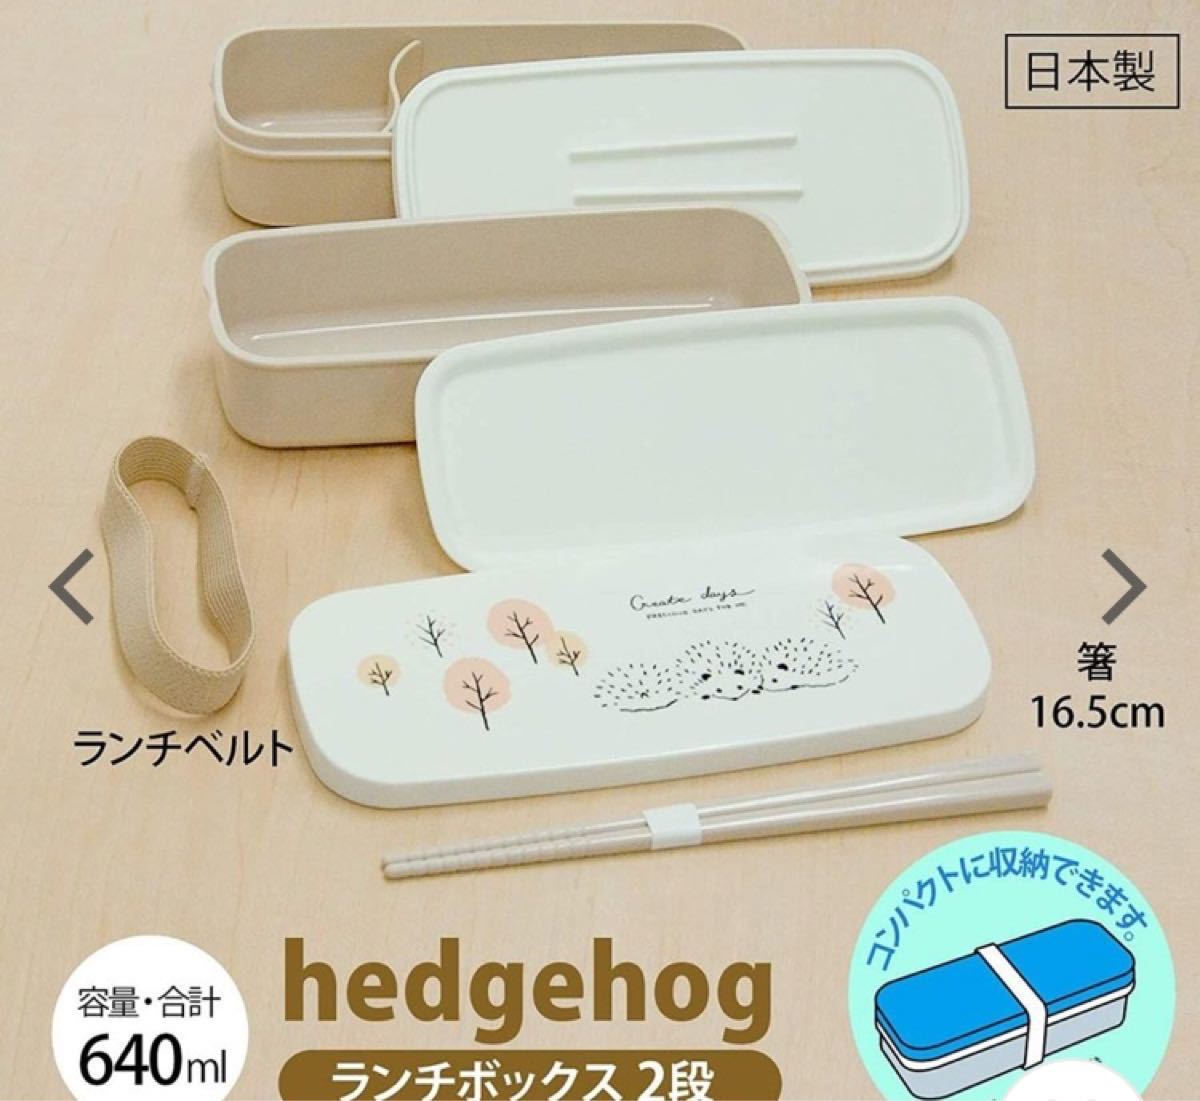 OSK hedgehog (ヘッジホッグ) ランチボックス二段 (仕切付) 日本製 ハリネズミ柄とシロクマ&ペンギン柄の2個セット